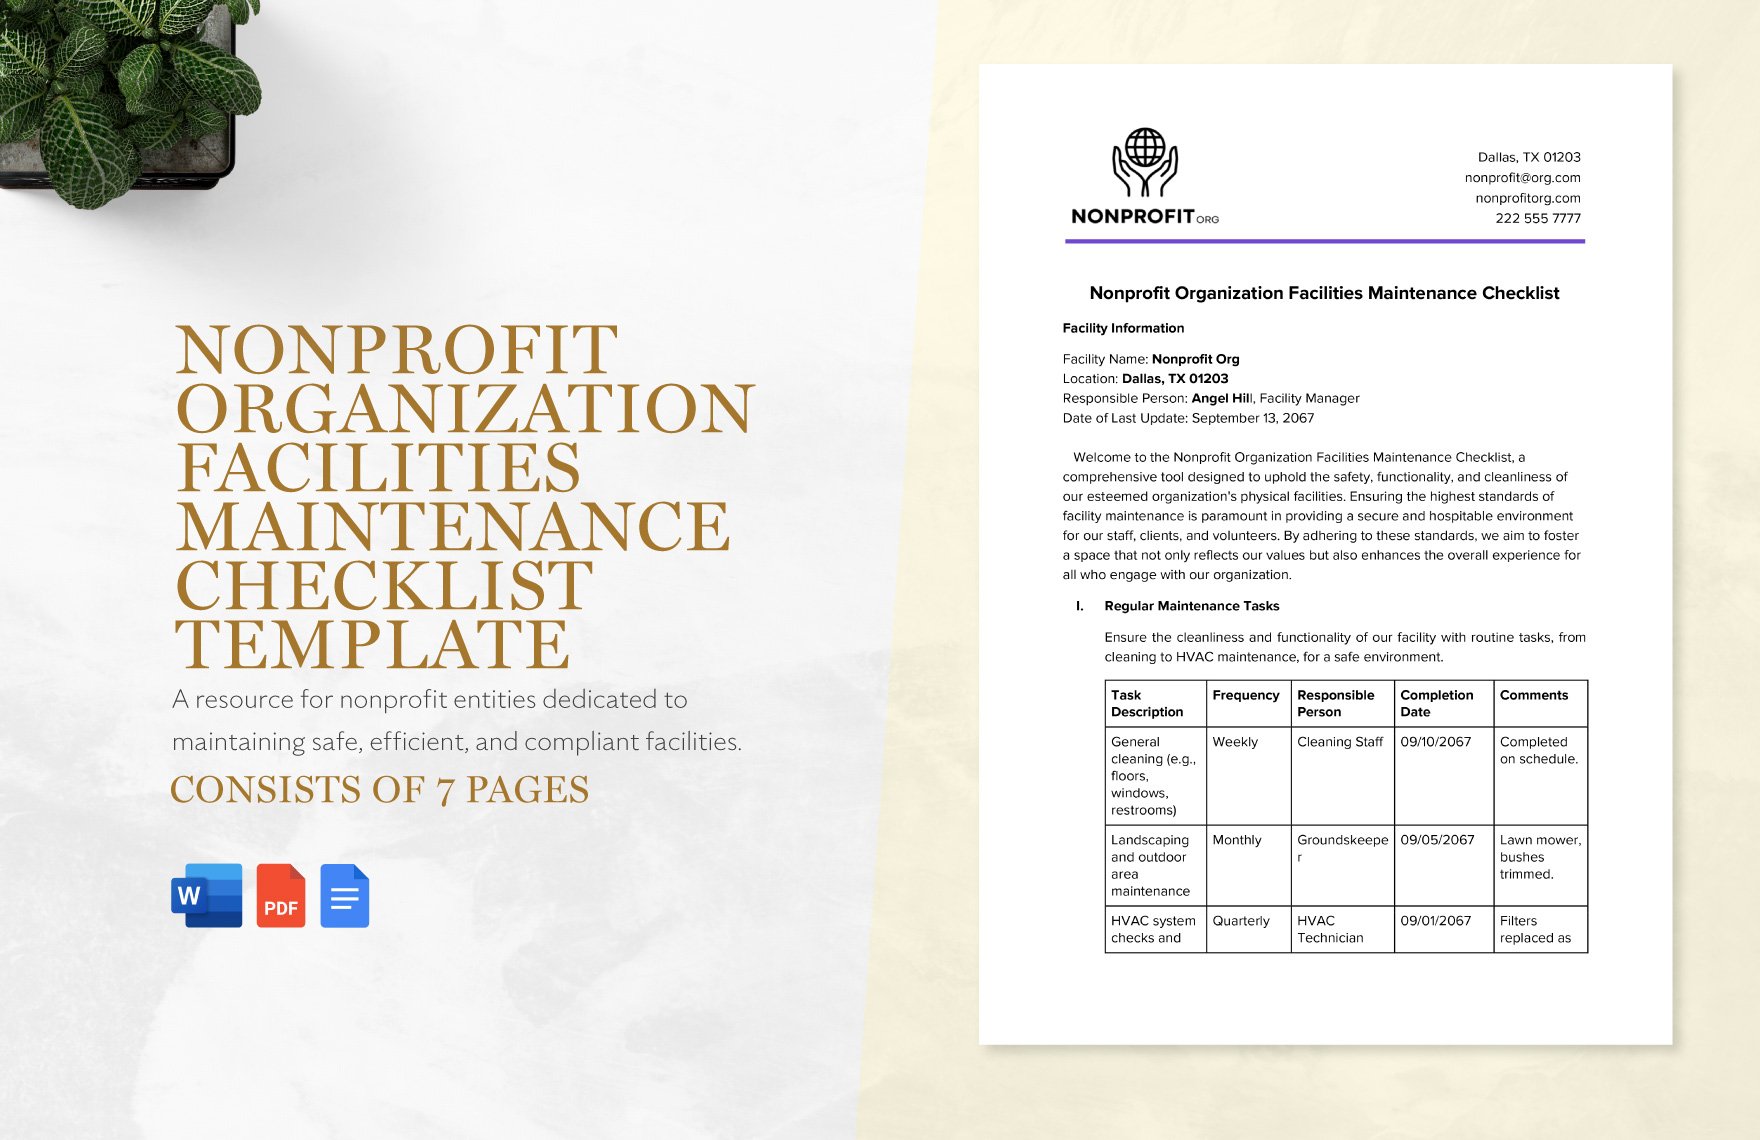 Nonprofit Organization Facilities Maintenance Checklist Template in Word, Google Docs, PDF